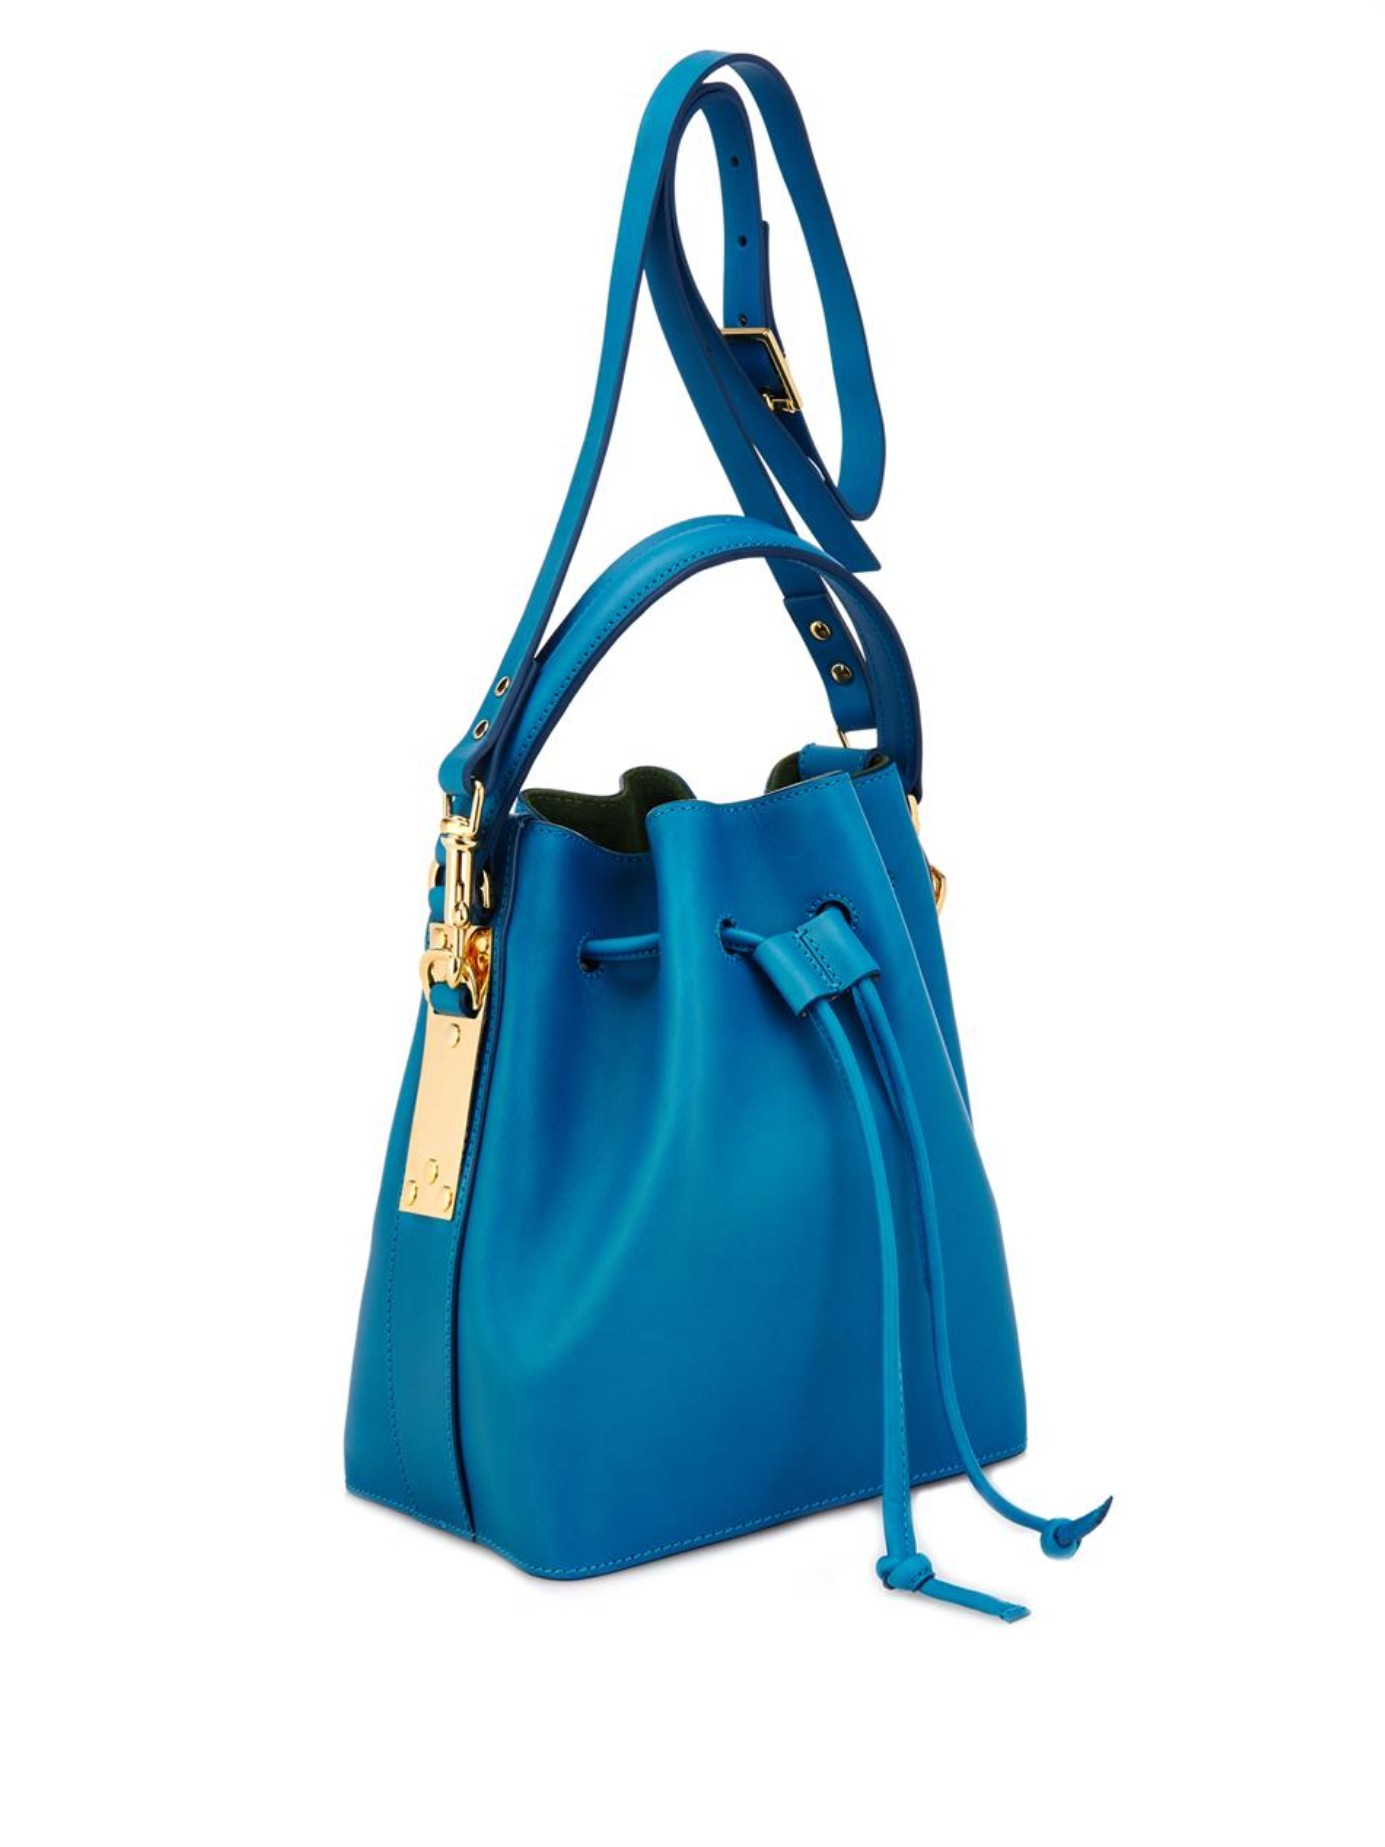 Lyst - Sophie hulme Mini Leather Bucket Bag in Blue